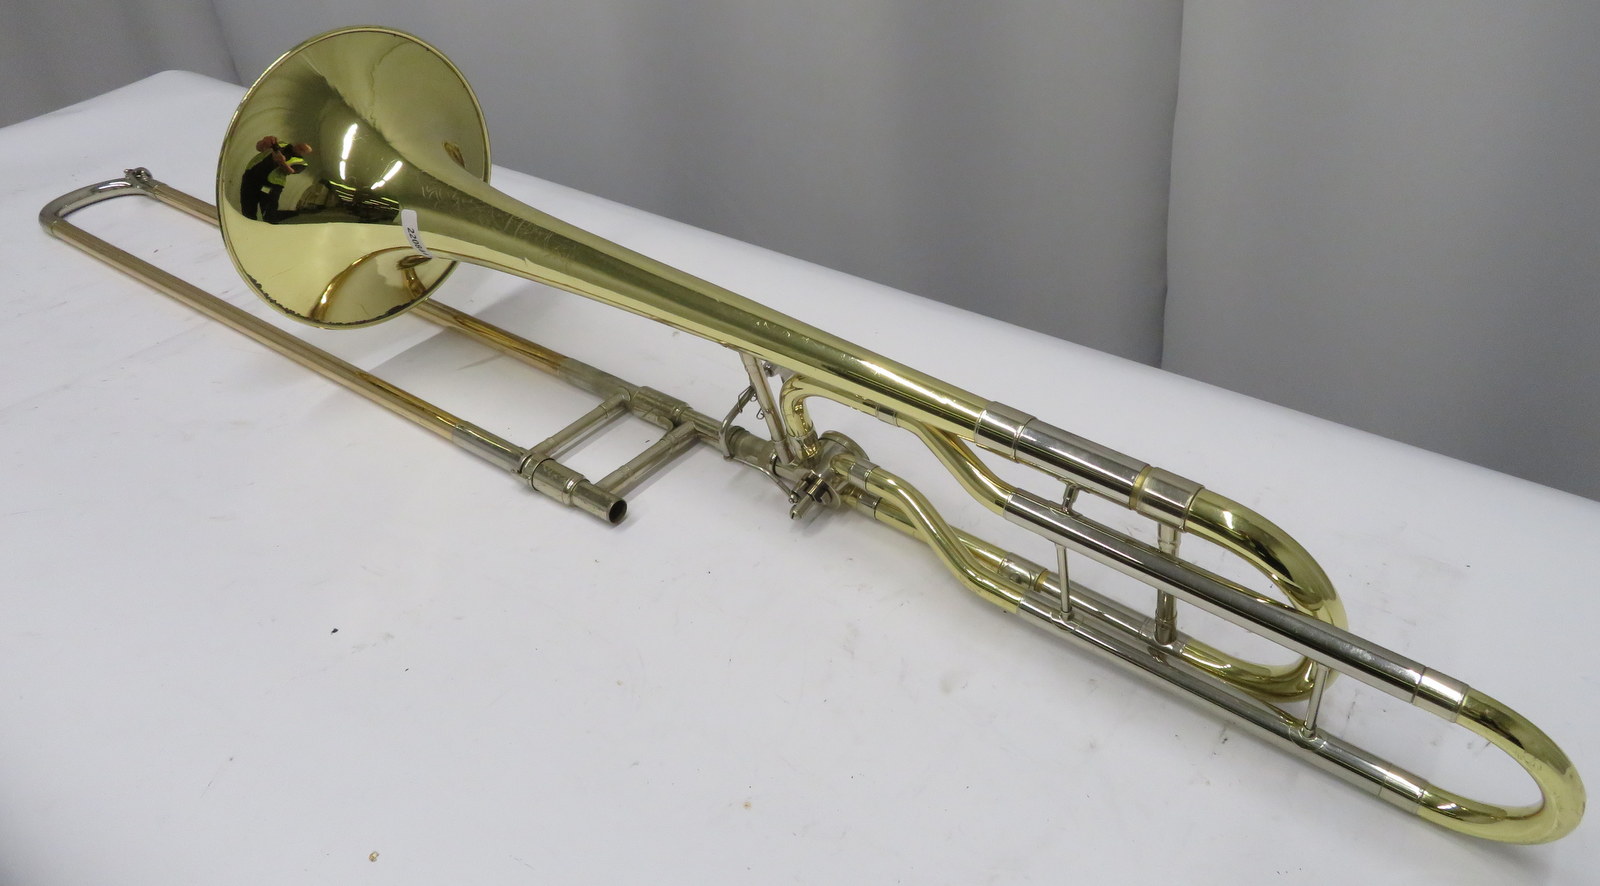 conn trombone serial number lookup